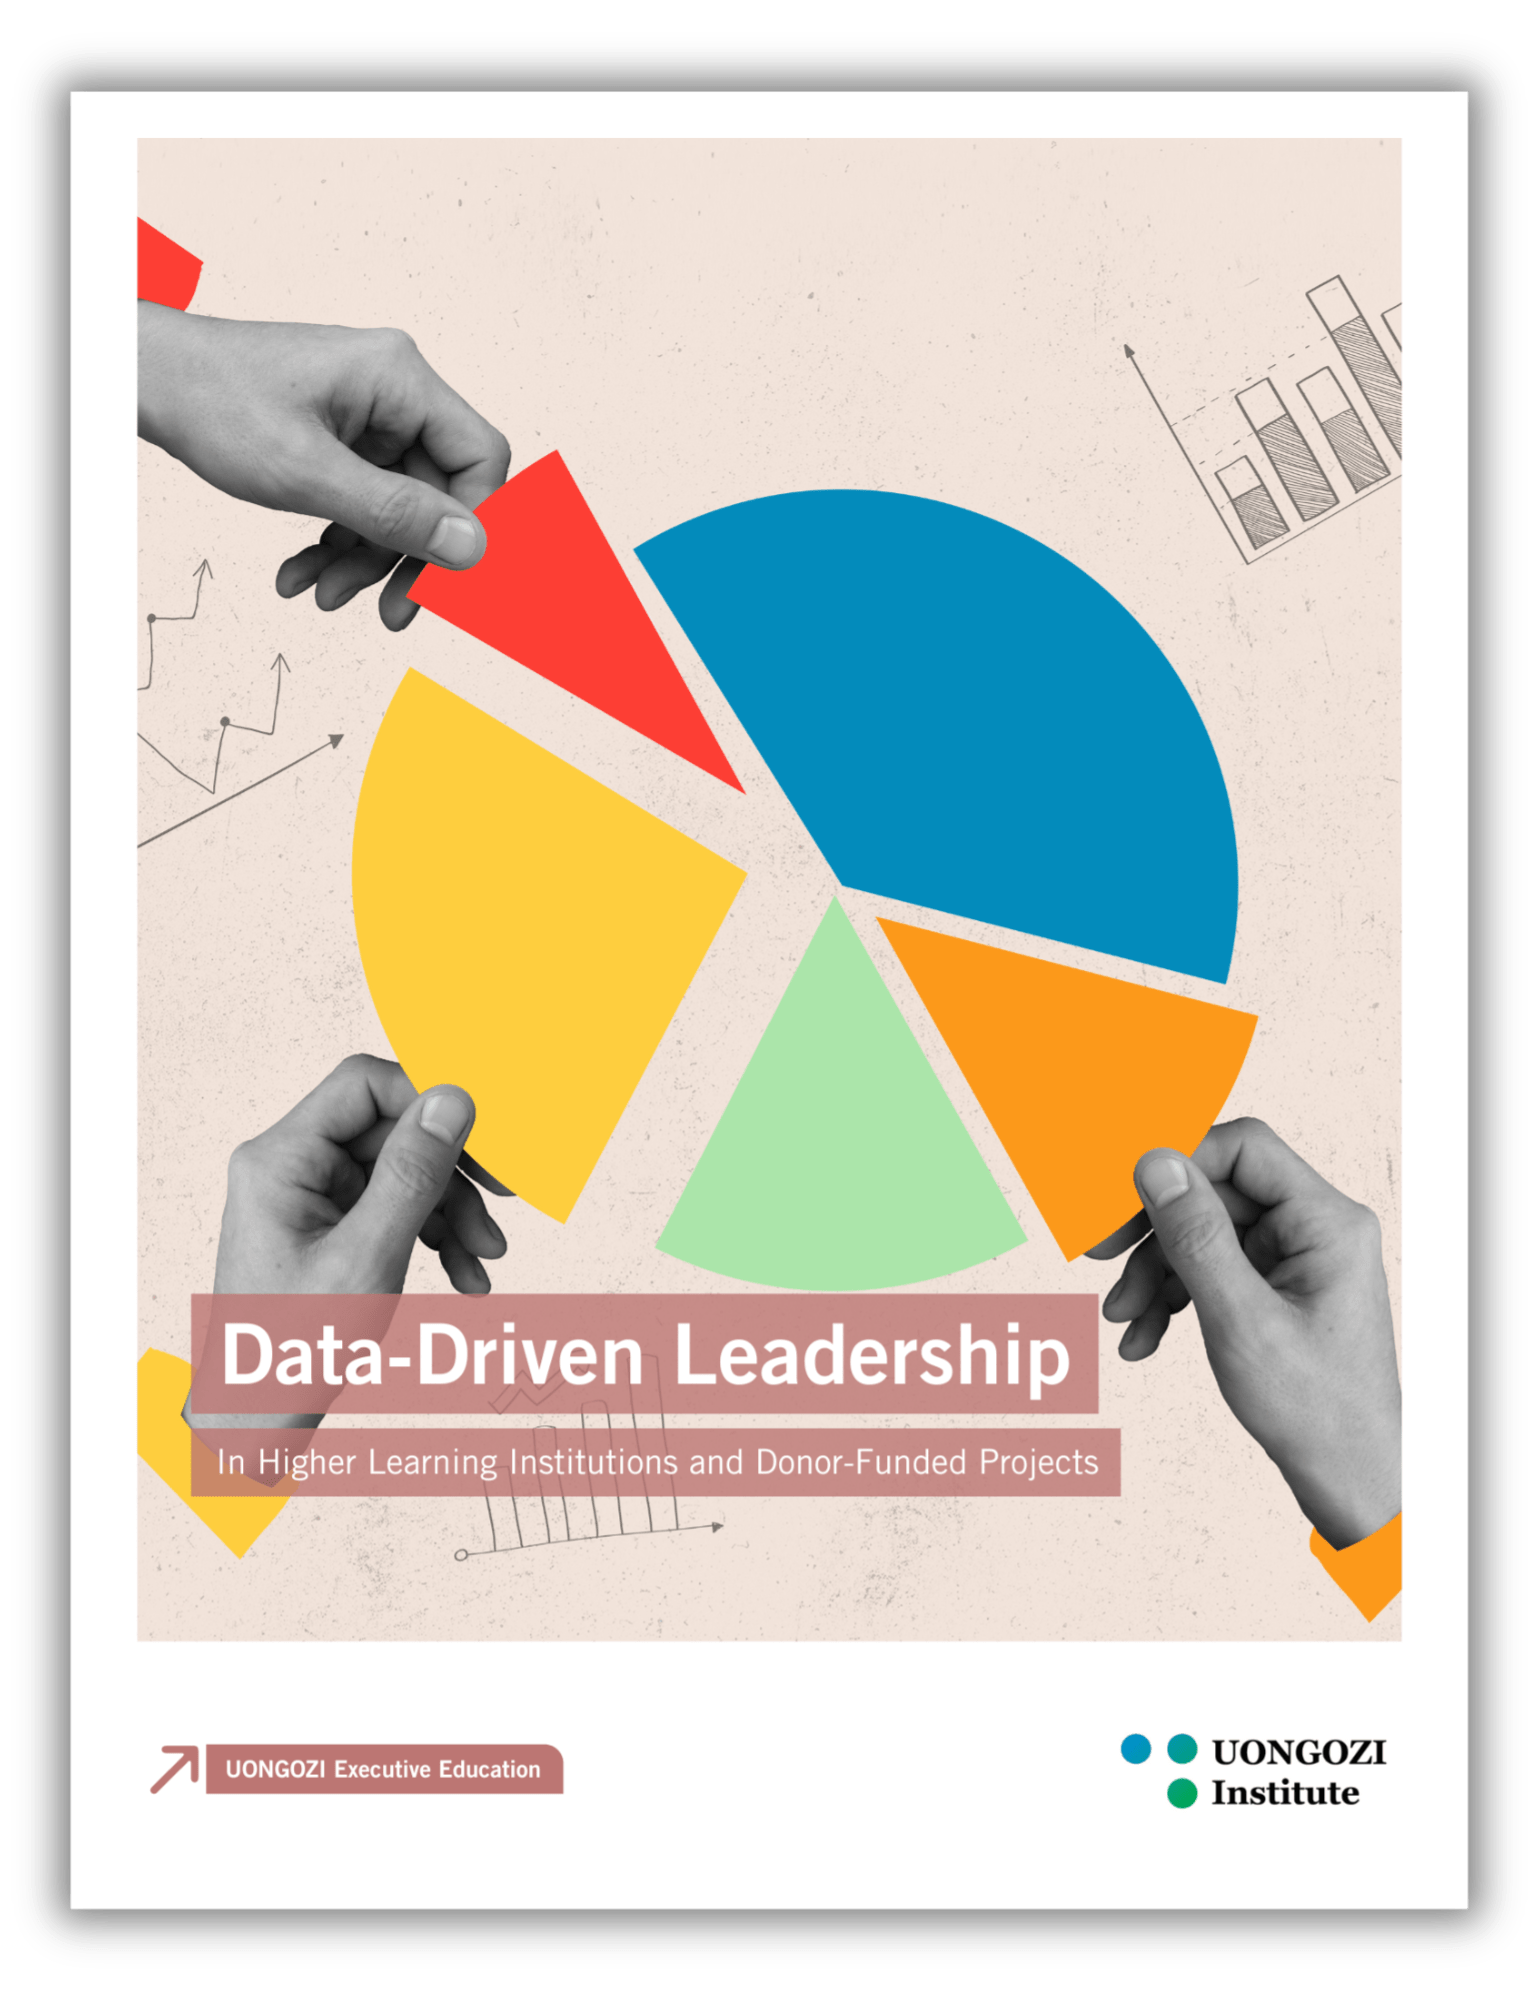 Data-driven leadership